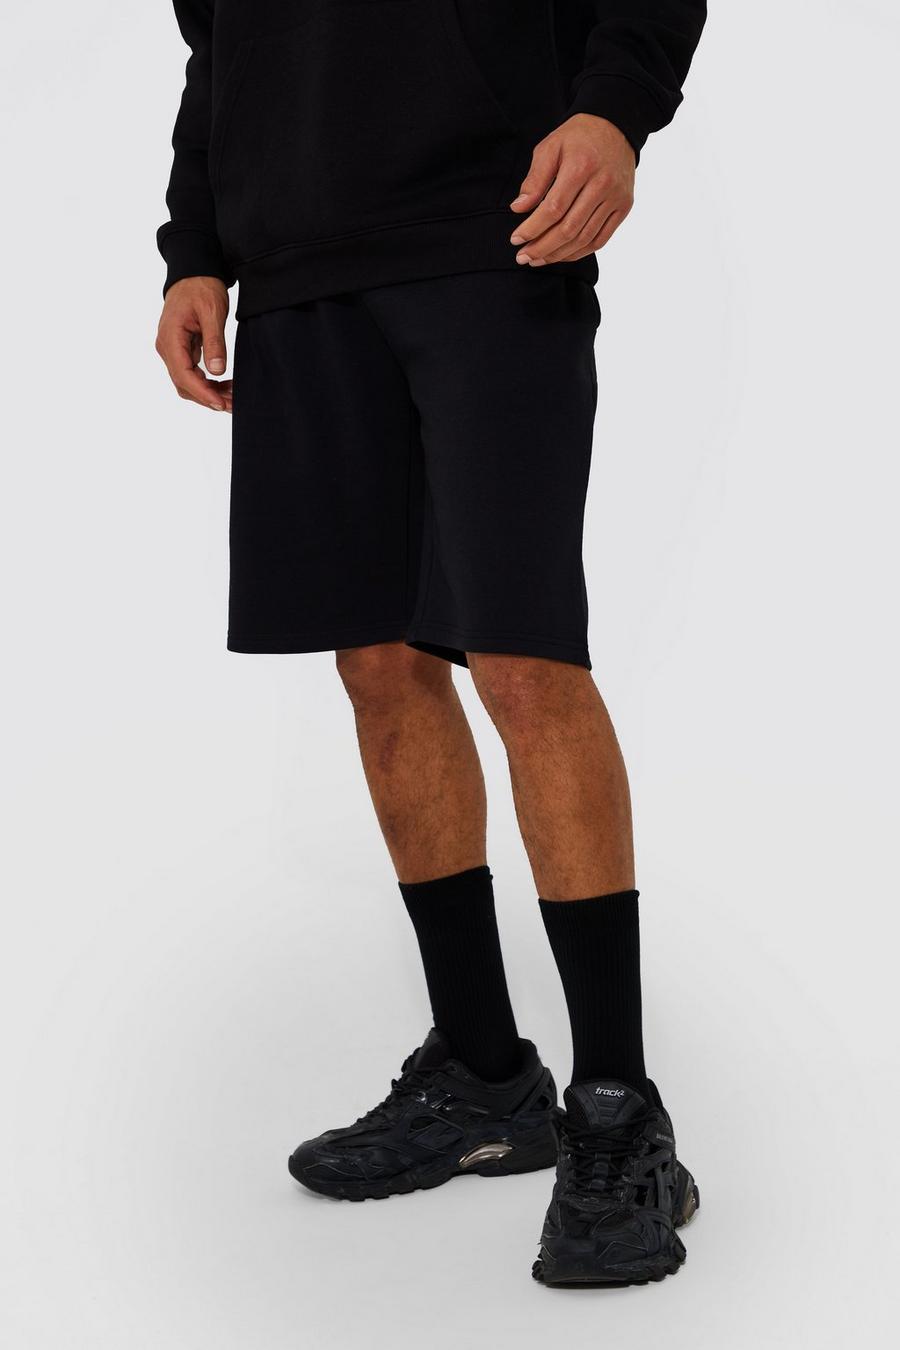 Black Tall Mid Length Jersey Shorts